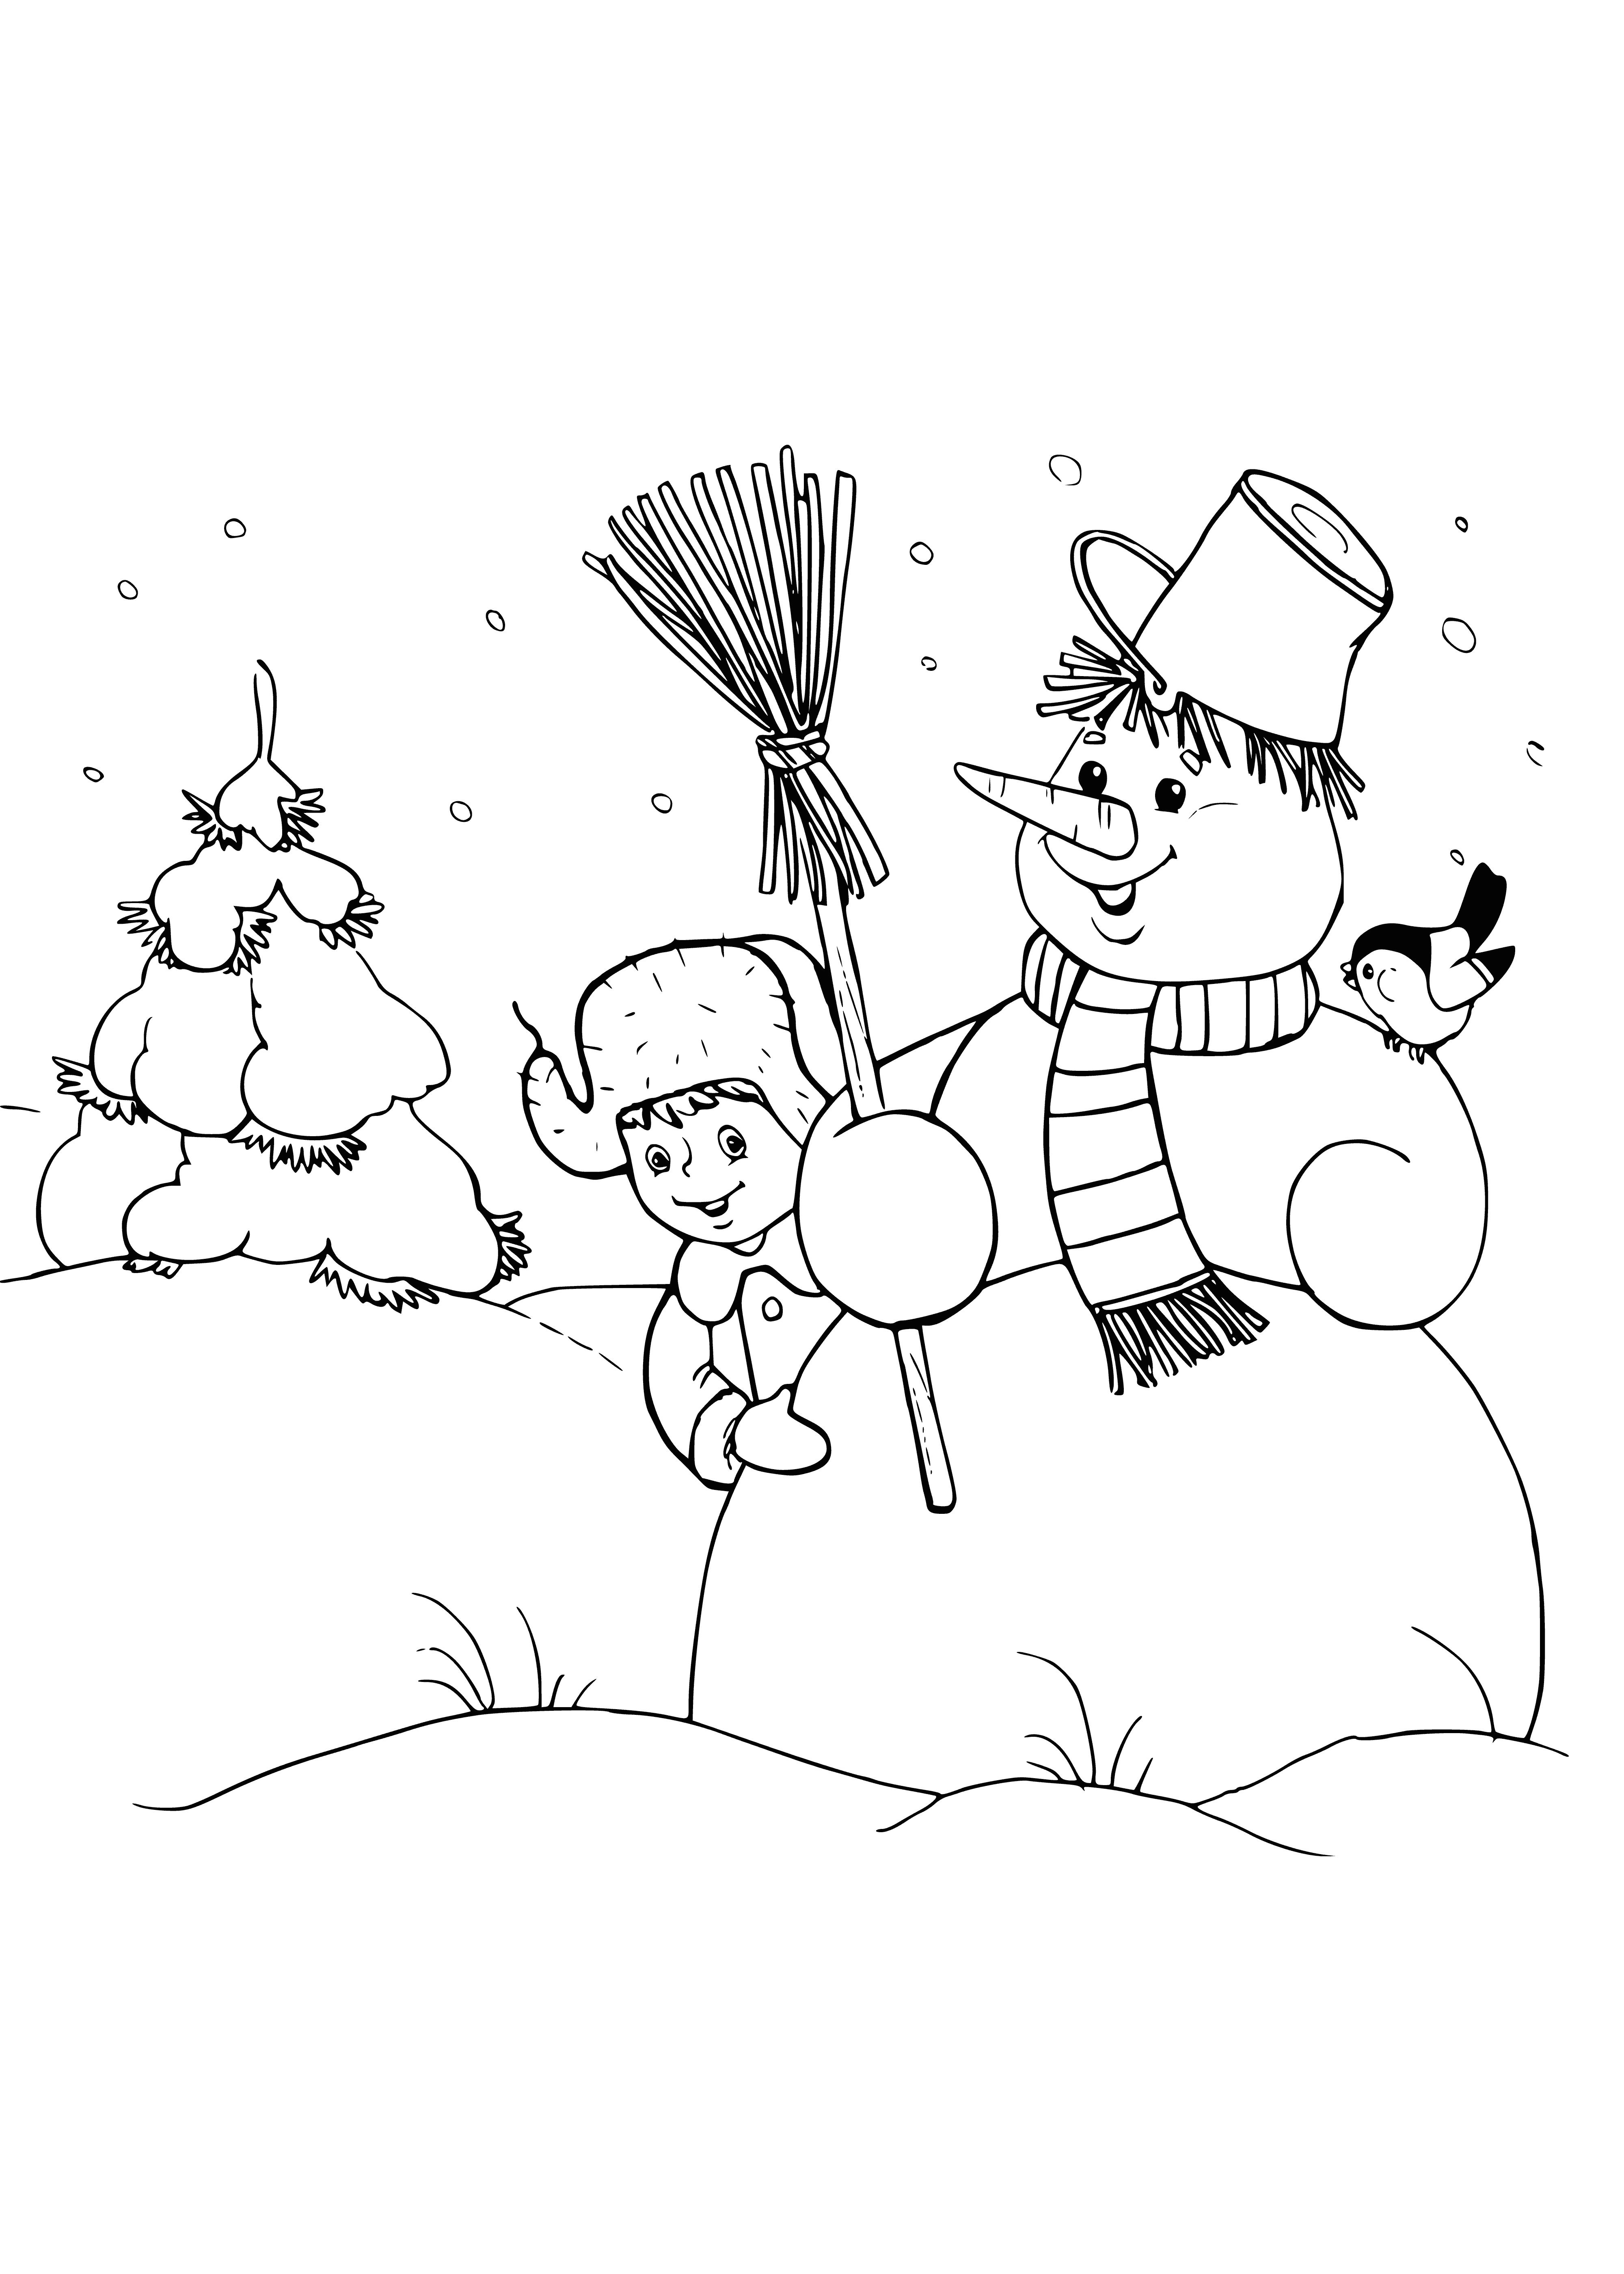 Boneco de neve na floresta de inverno página para colorir